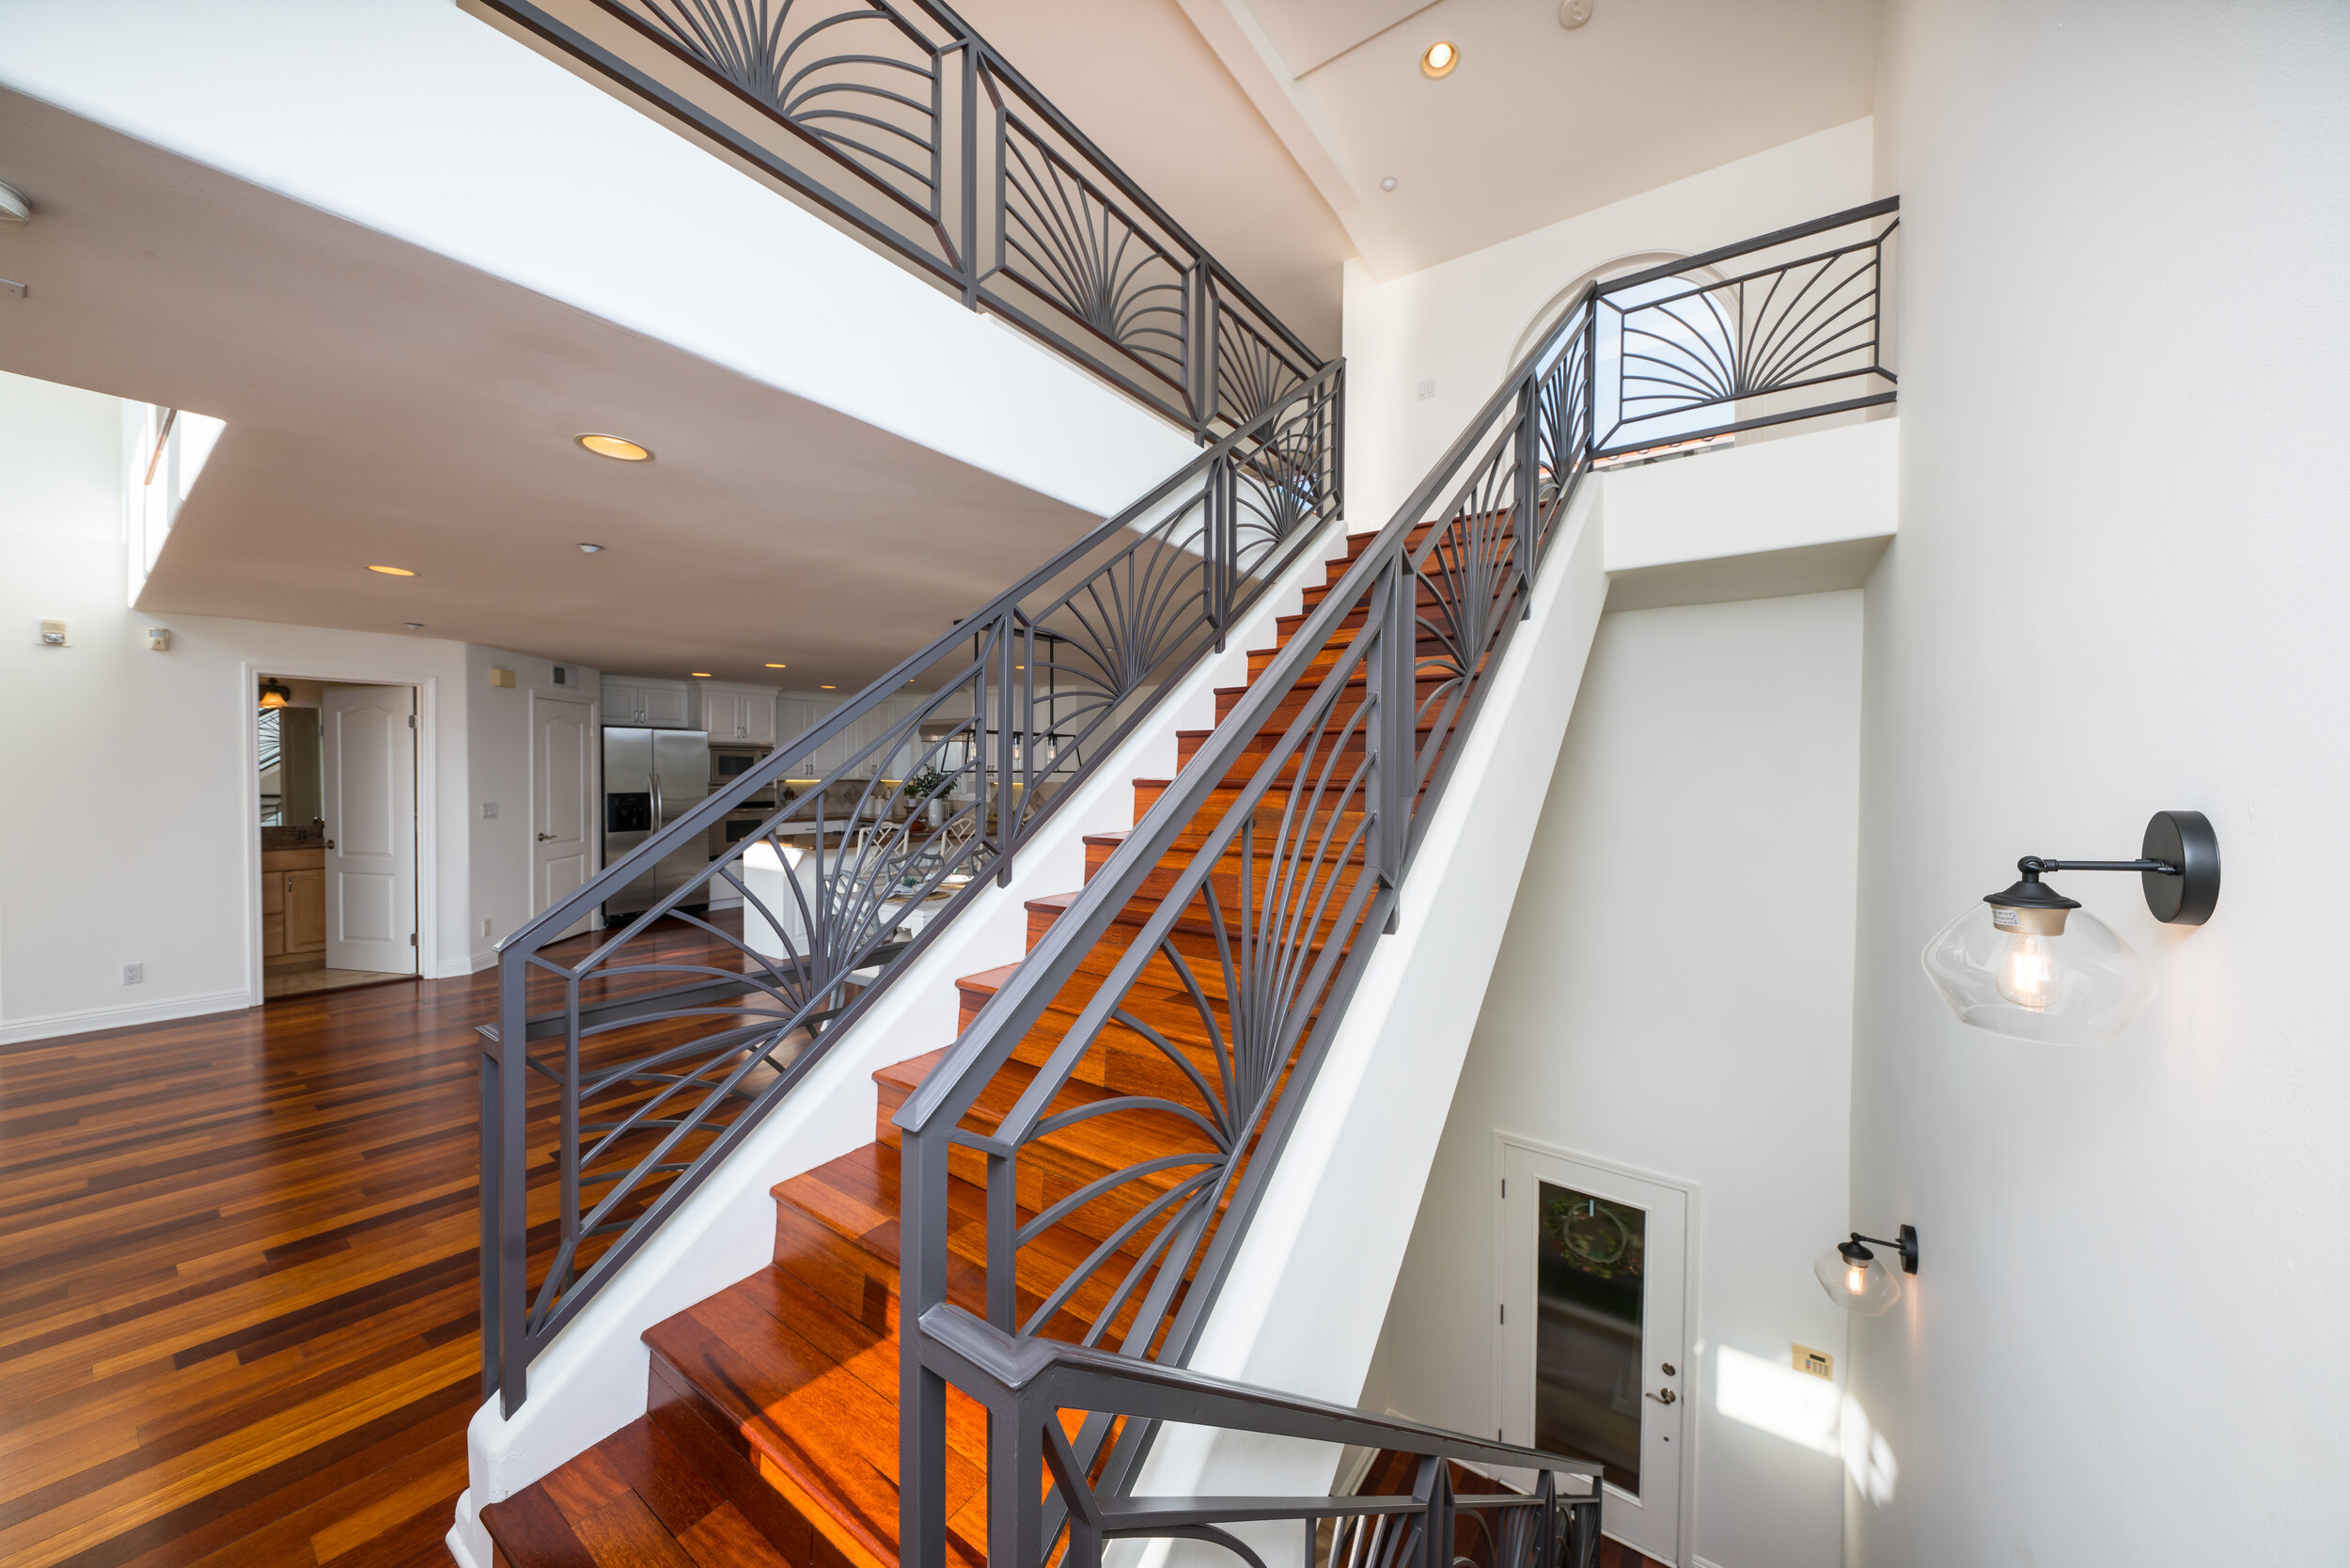 Staircase to loft 634 9th Street Hermosa Beach 90254.JPG